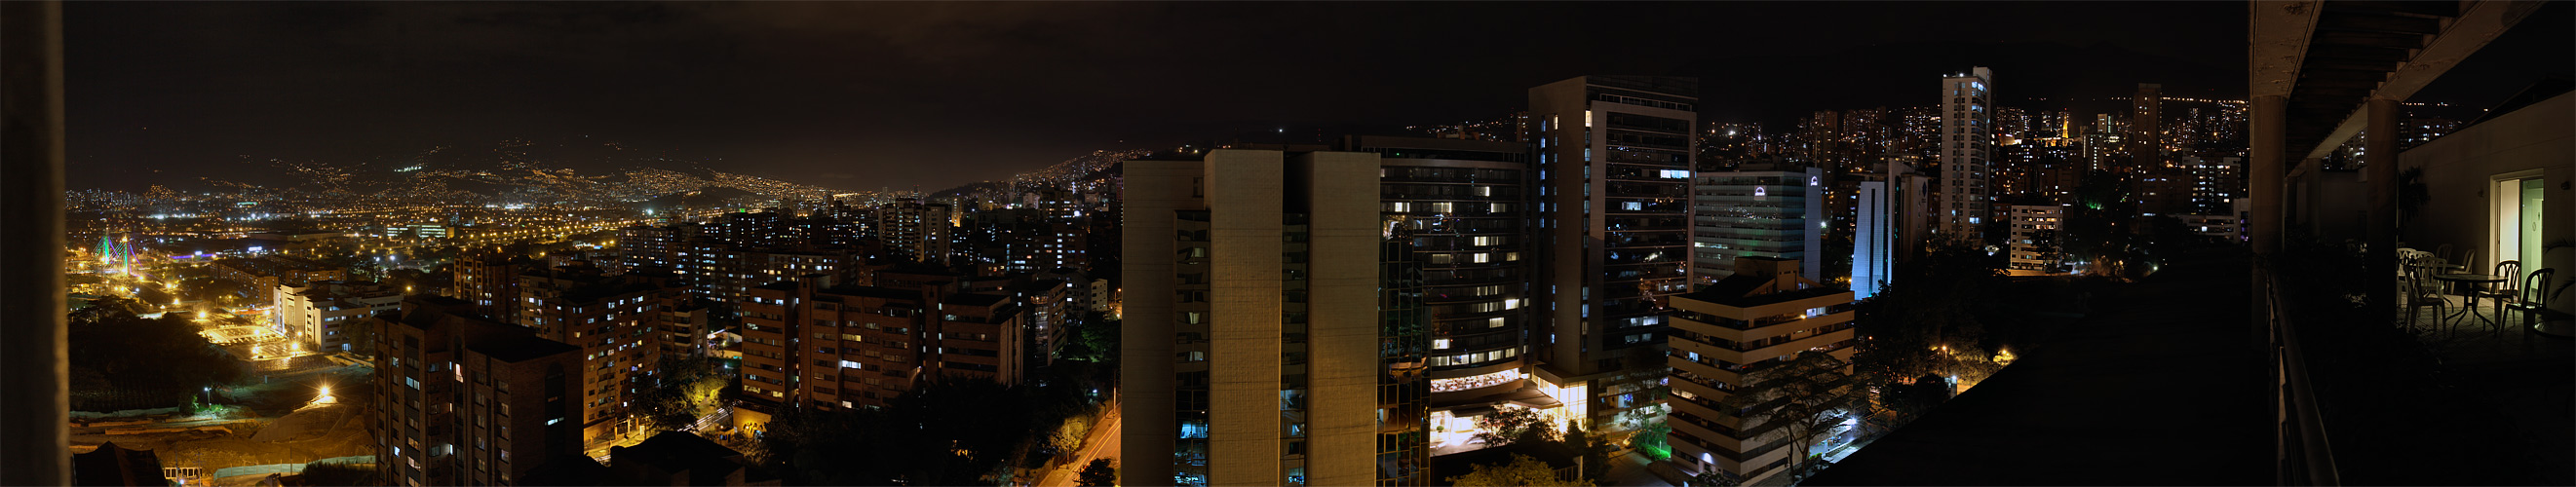 CO - 1 - Medellin night panorama